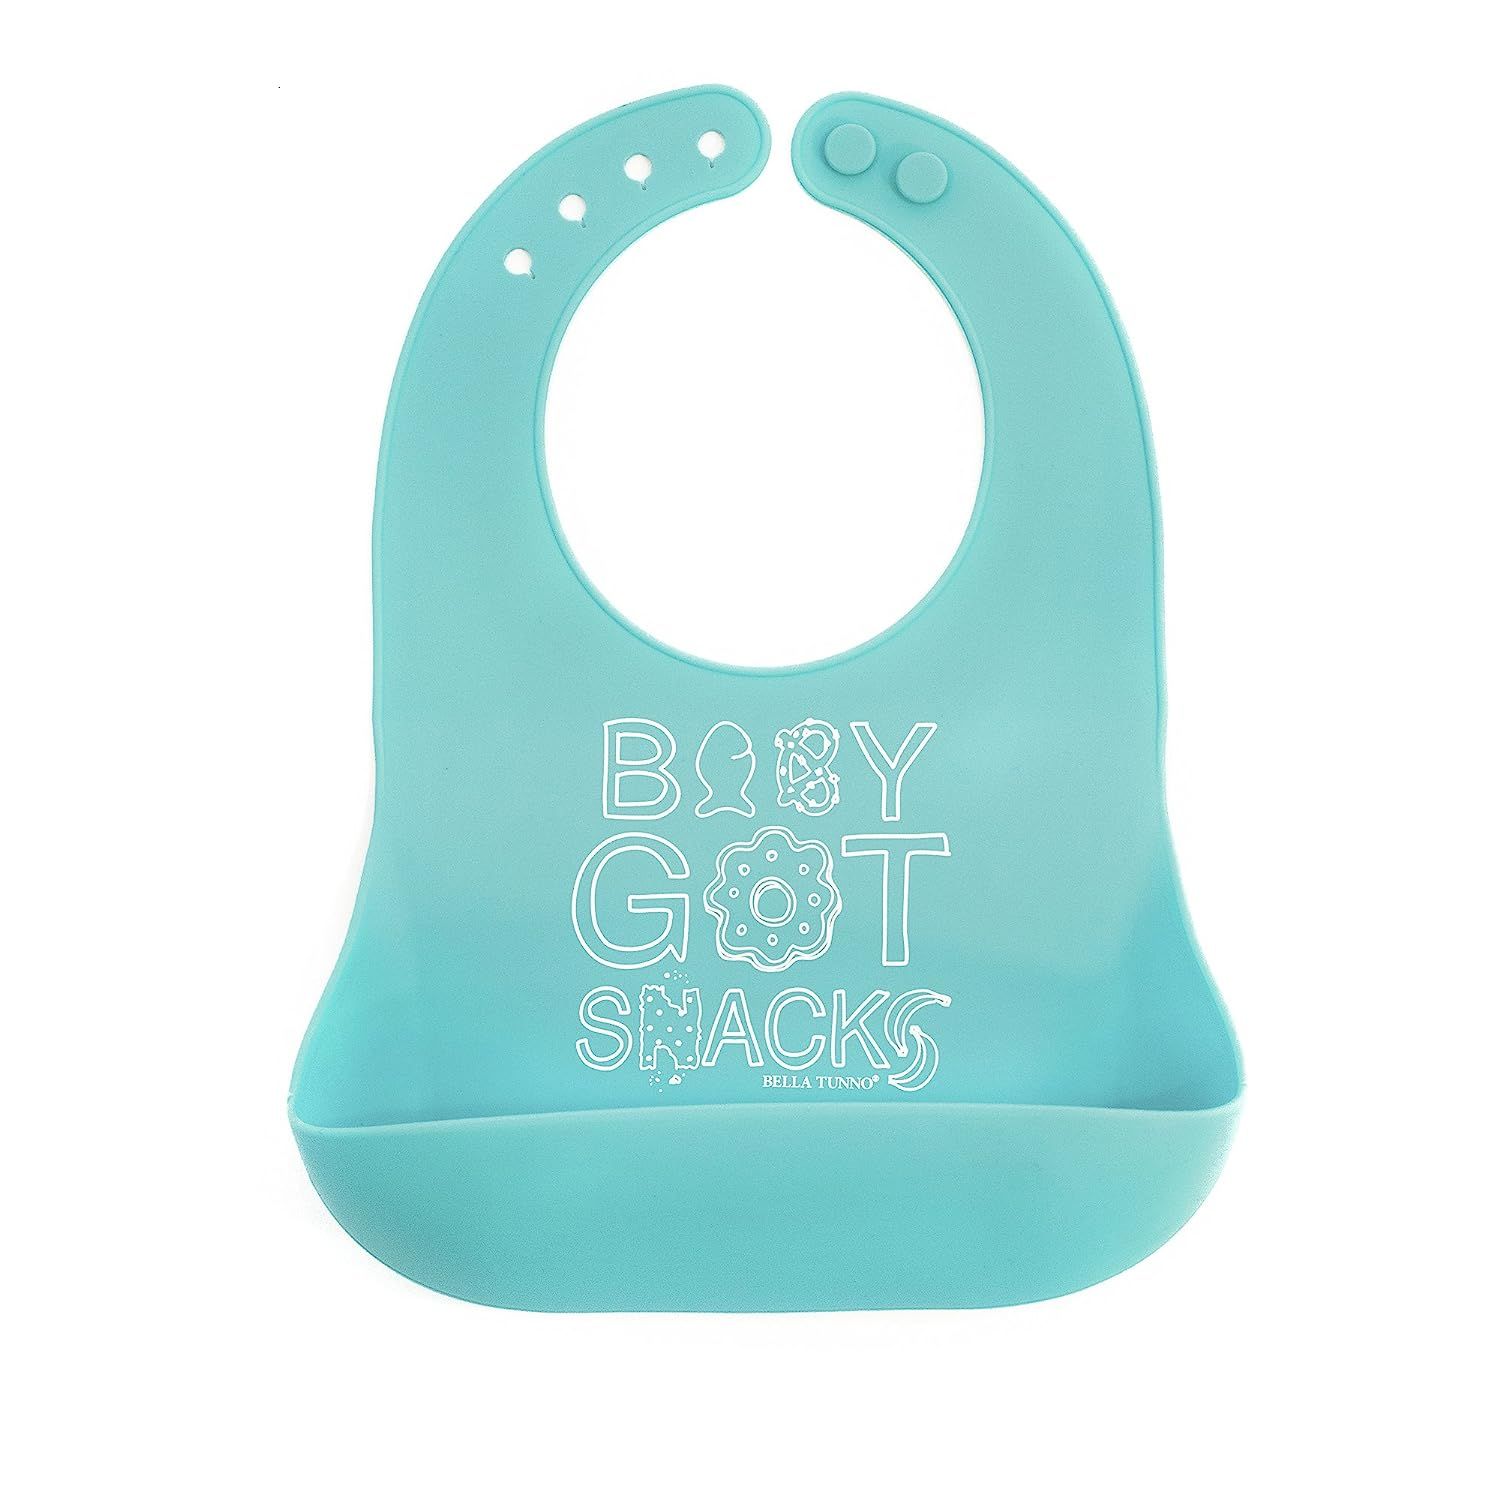 Bella Tunno Silicone Baby Bib, Durable, Adjustable, Waterproof Silicone Bib for Baby Girls & Boys... | Amazon (US)